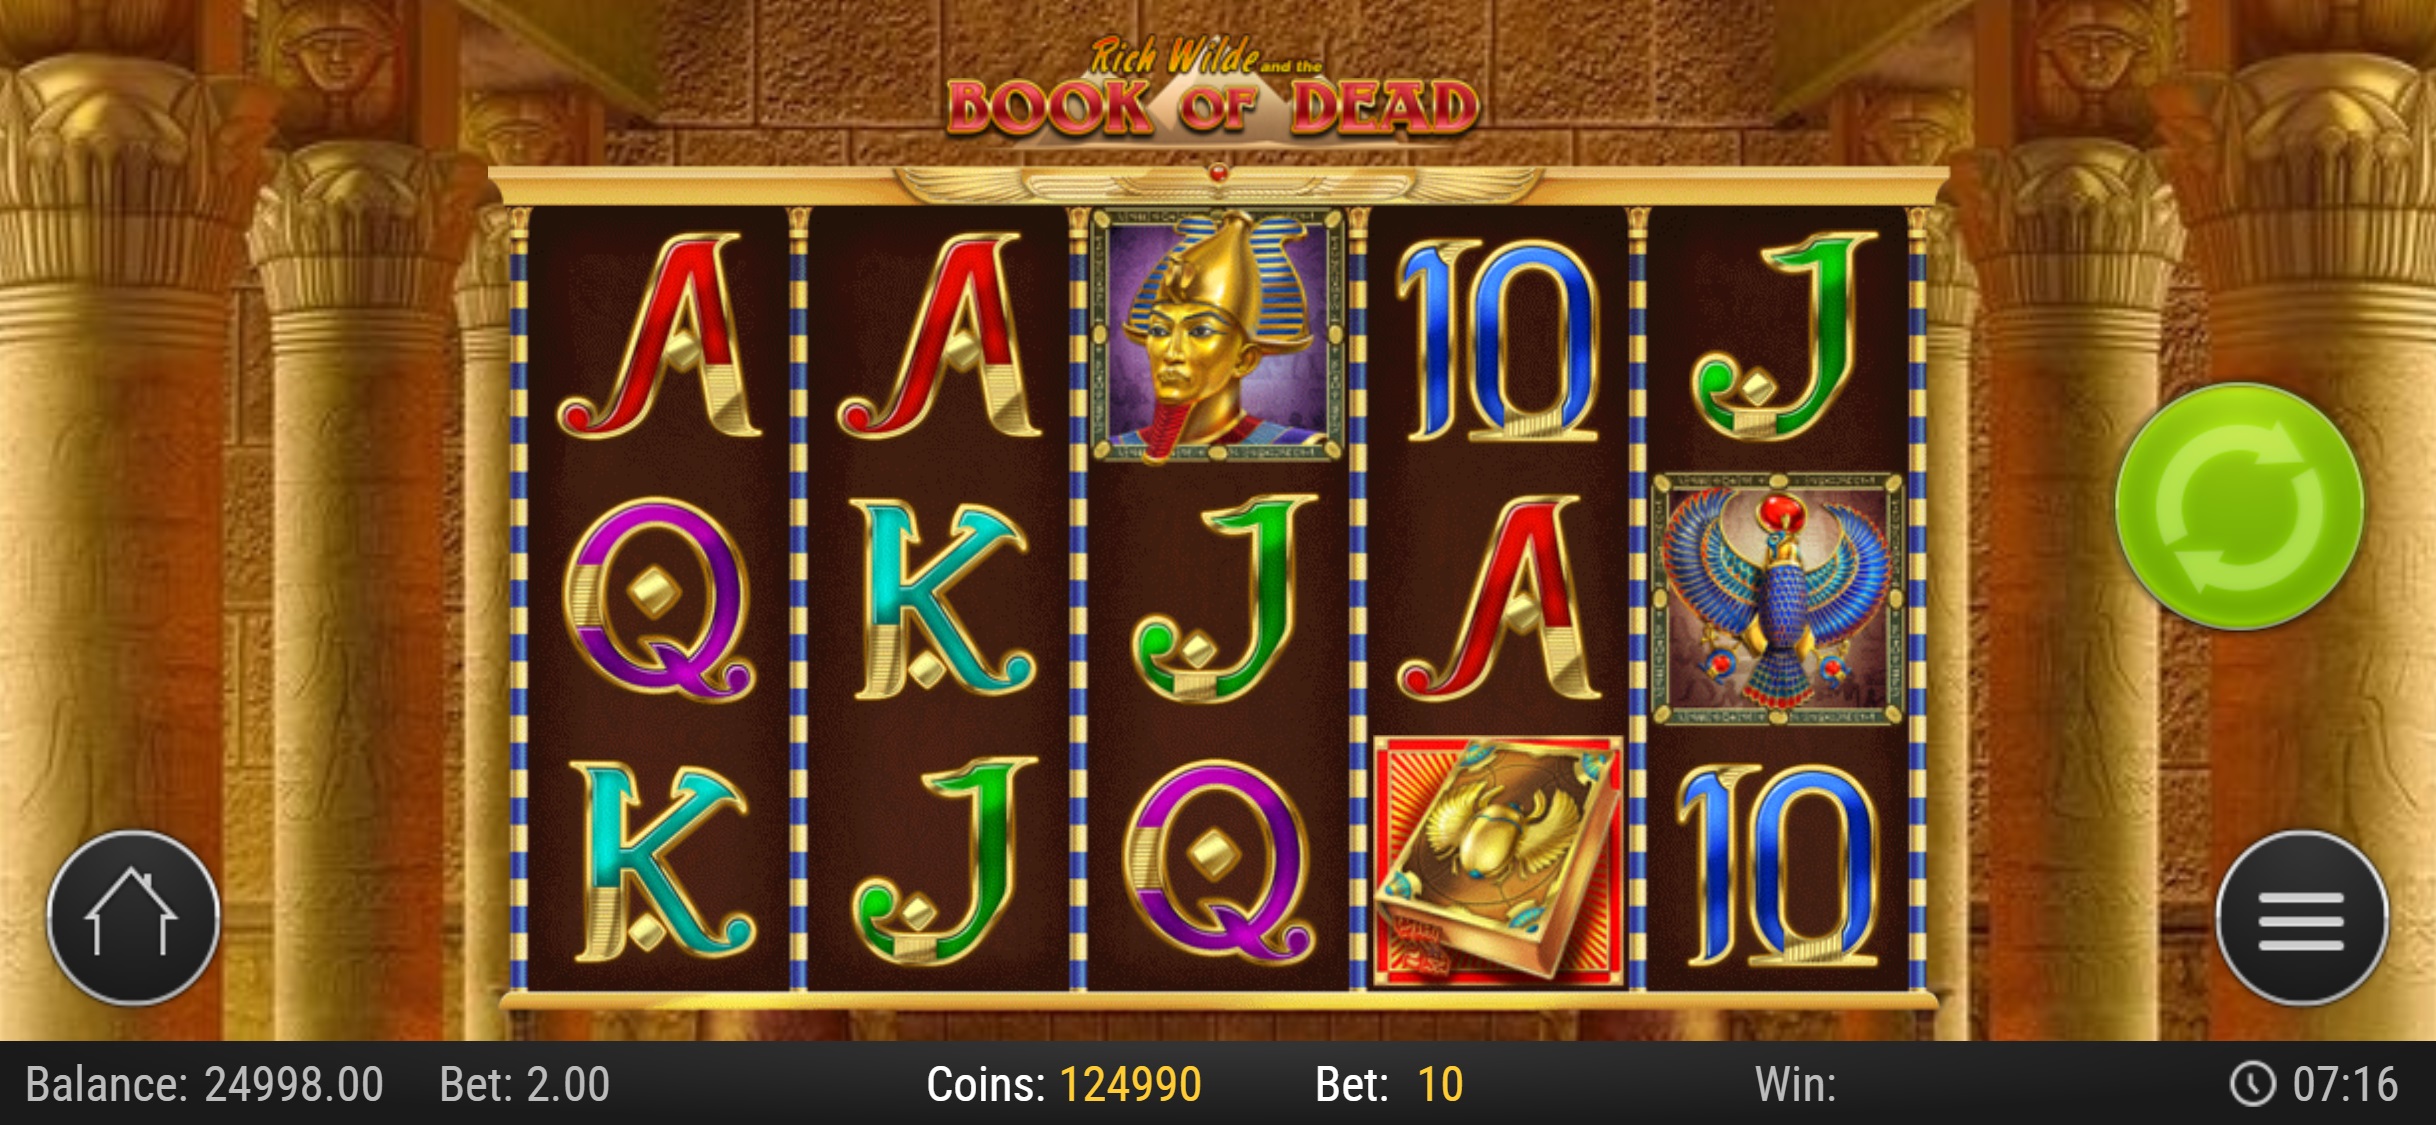 Karamba Casino Mobile Slot Games Review